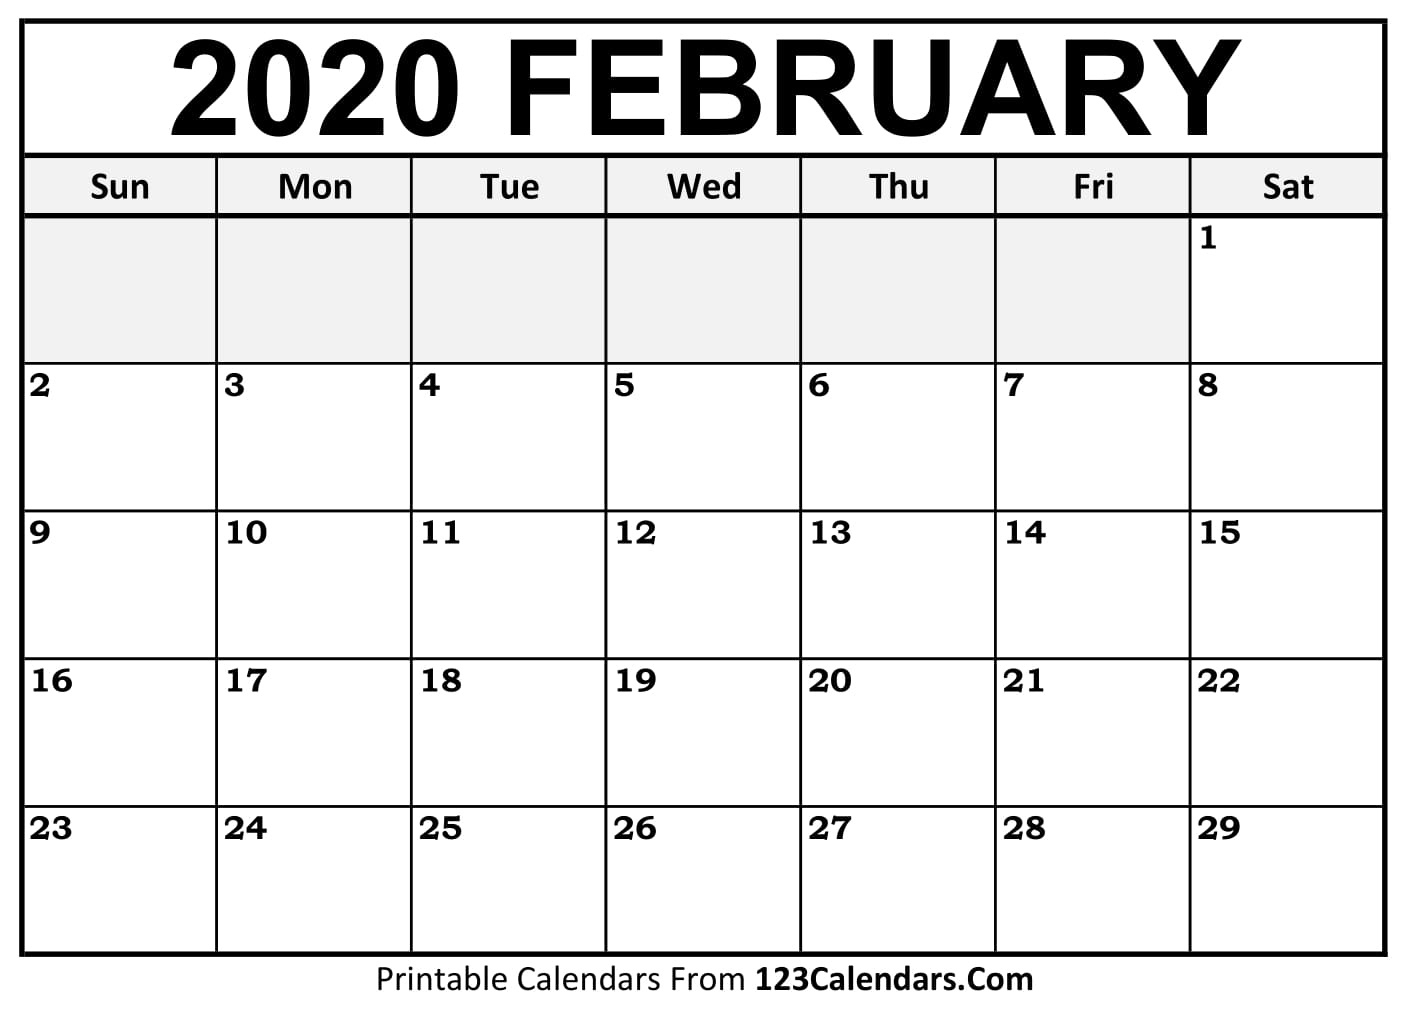 February 2020 Printable Calendar | 123Calendars – Calendar regarding January 2020 Calendar 123Calendars